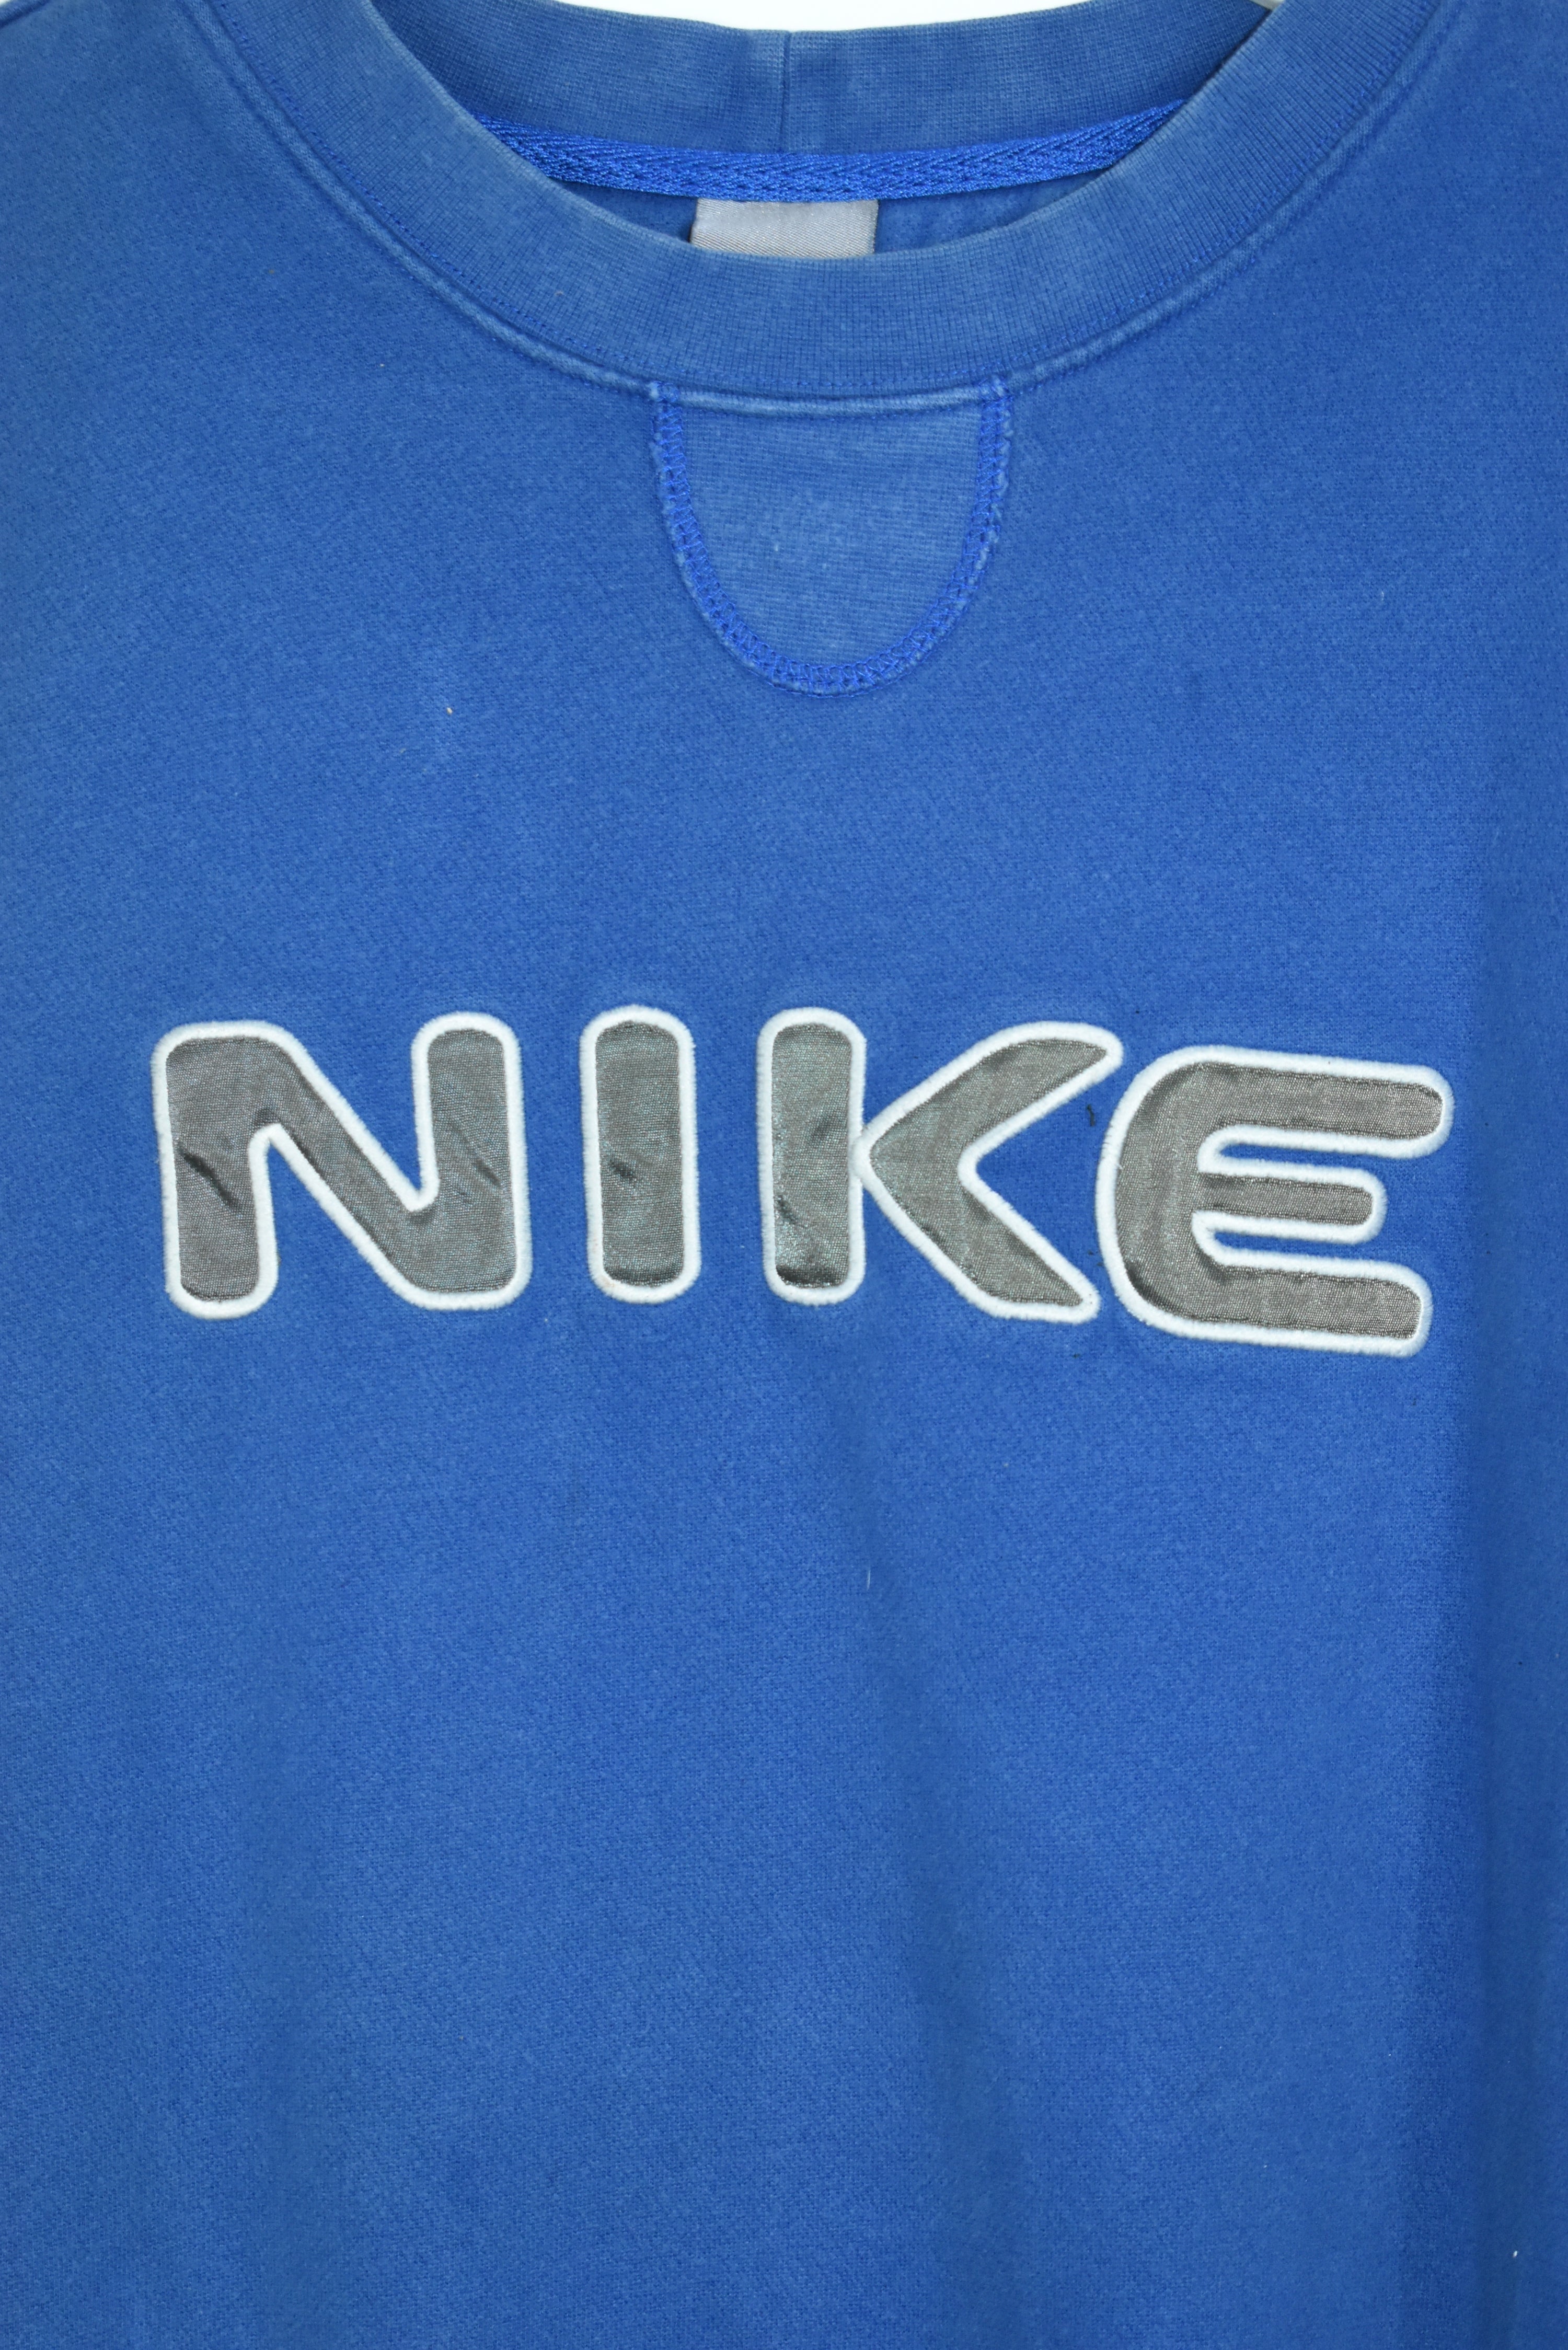 Vintage Nike Puff Print Embroidery Sweatshirt XLARGE